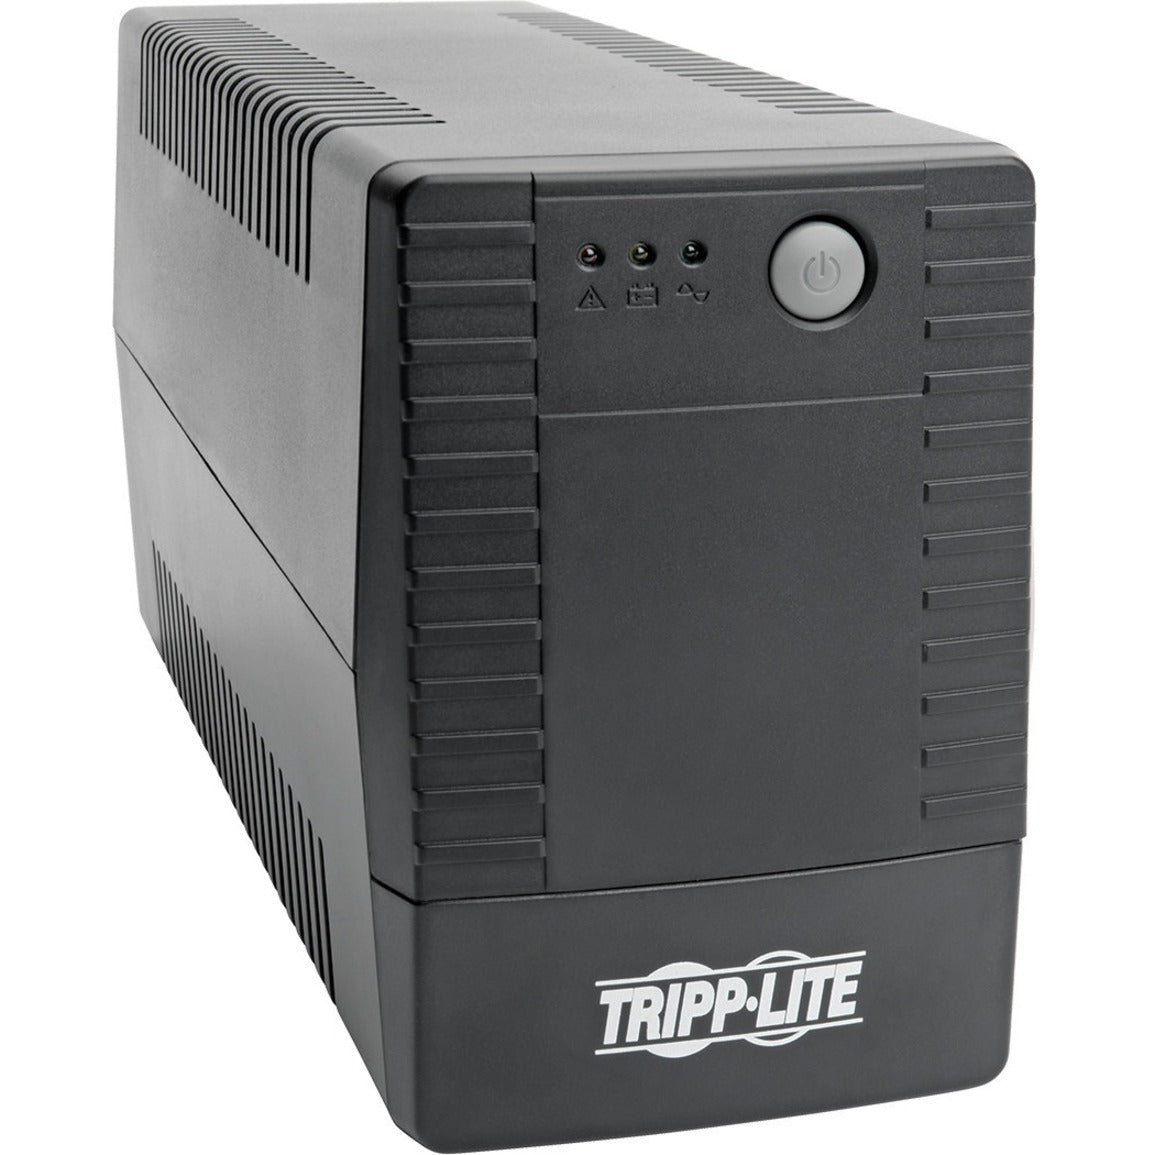 Tripp Lite VS900T General Purpose UPS, 900VA Desktop/Tower, 3 Year Warranty, Sine Wave, 480W Load Capacity